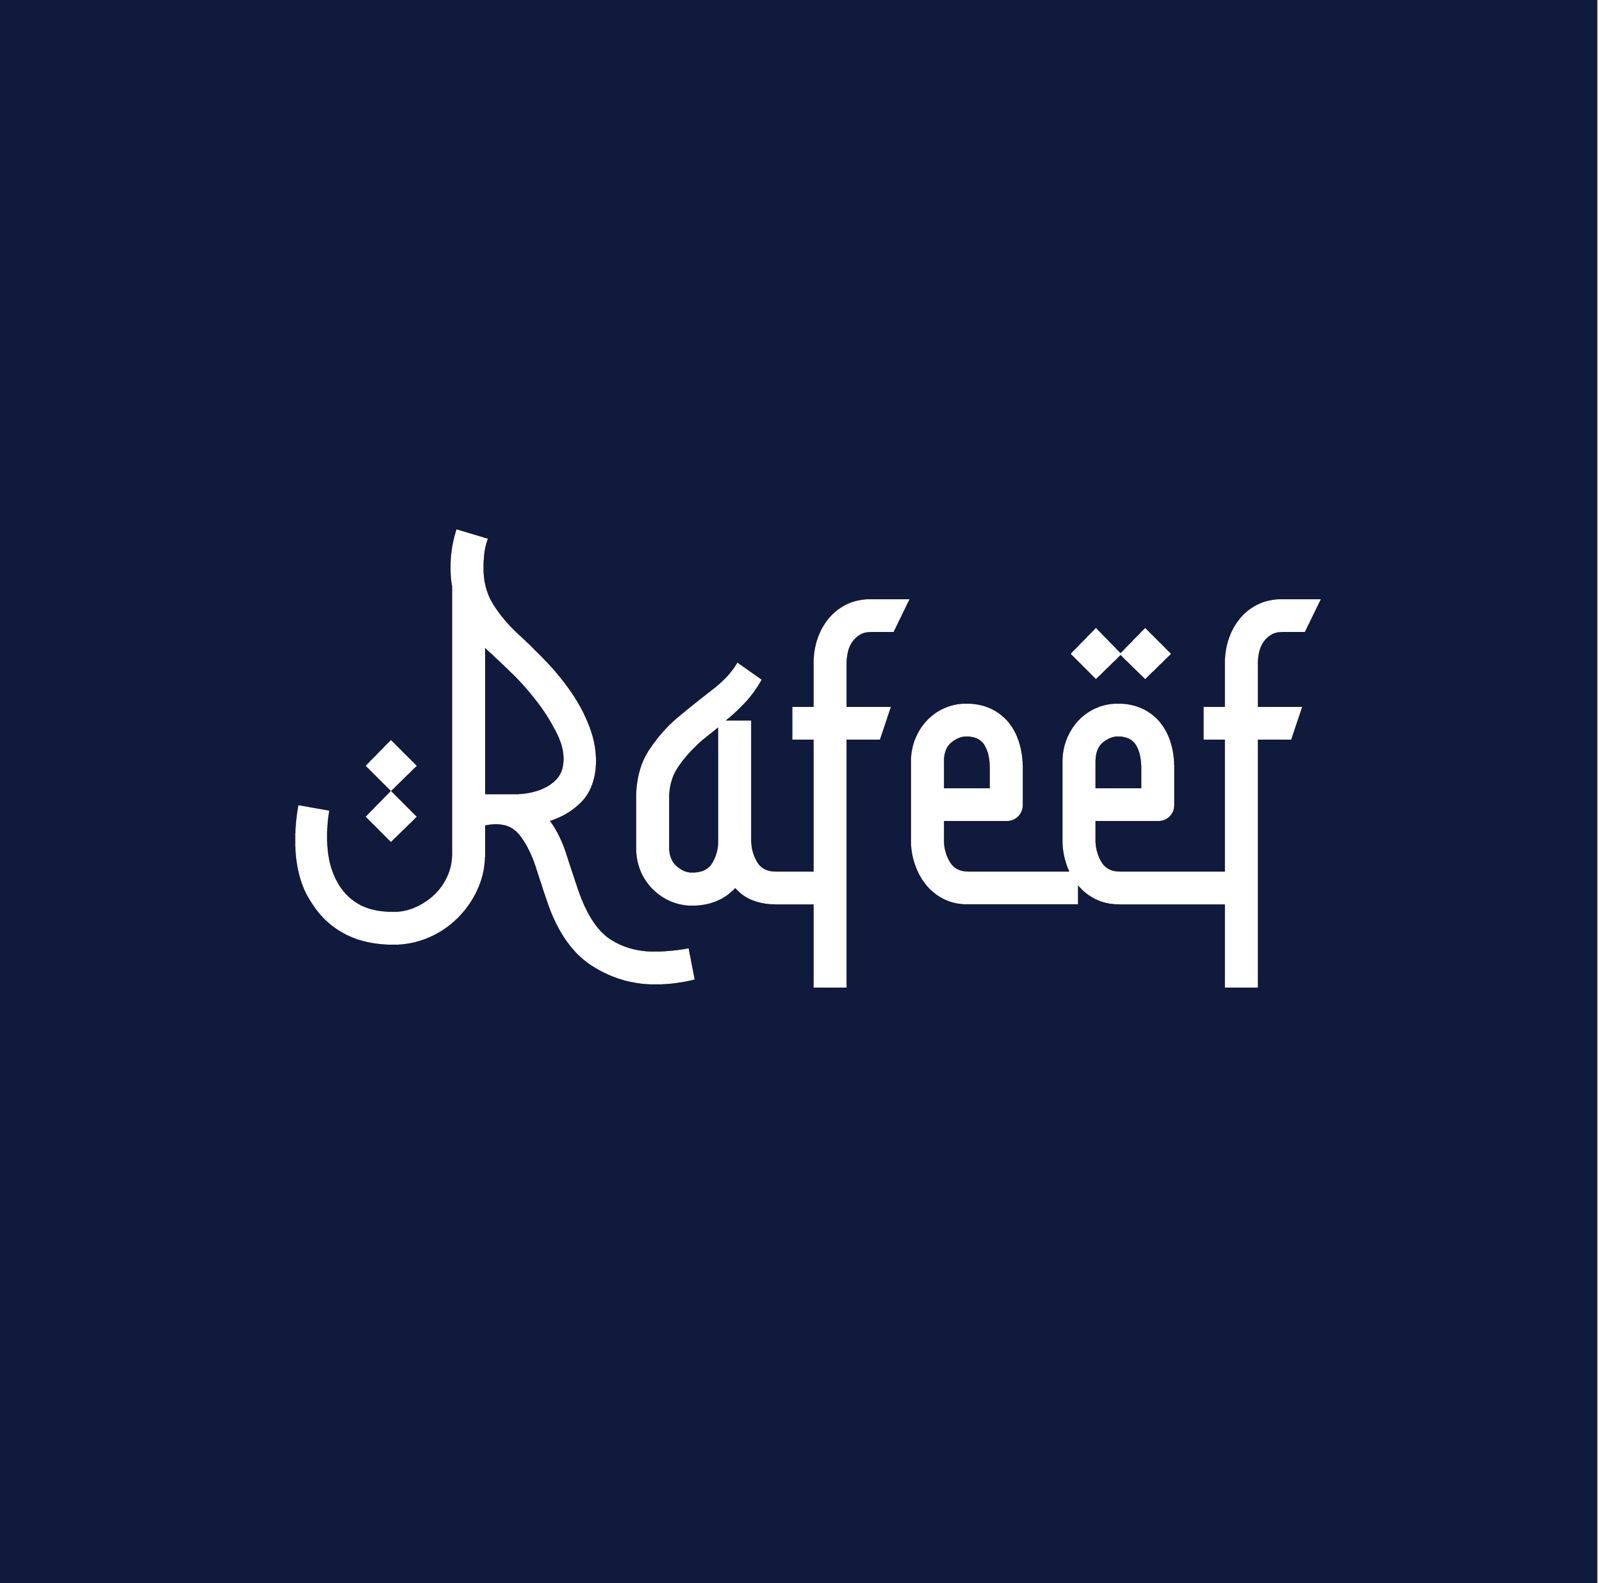 Rafeef – 2024 Season Service Fee Announced